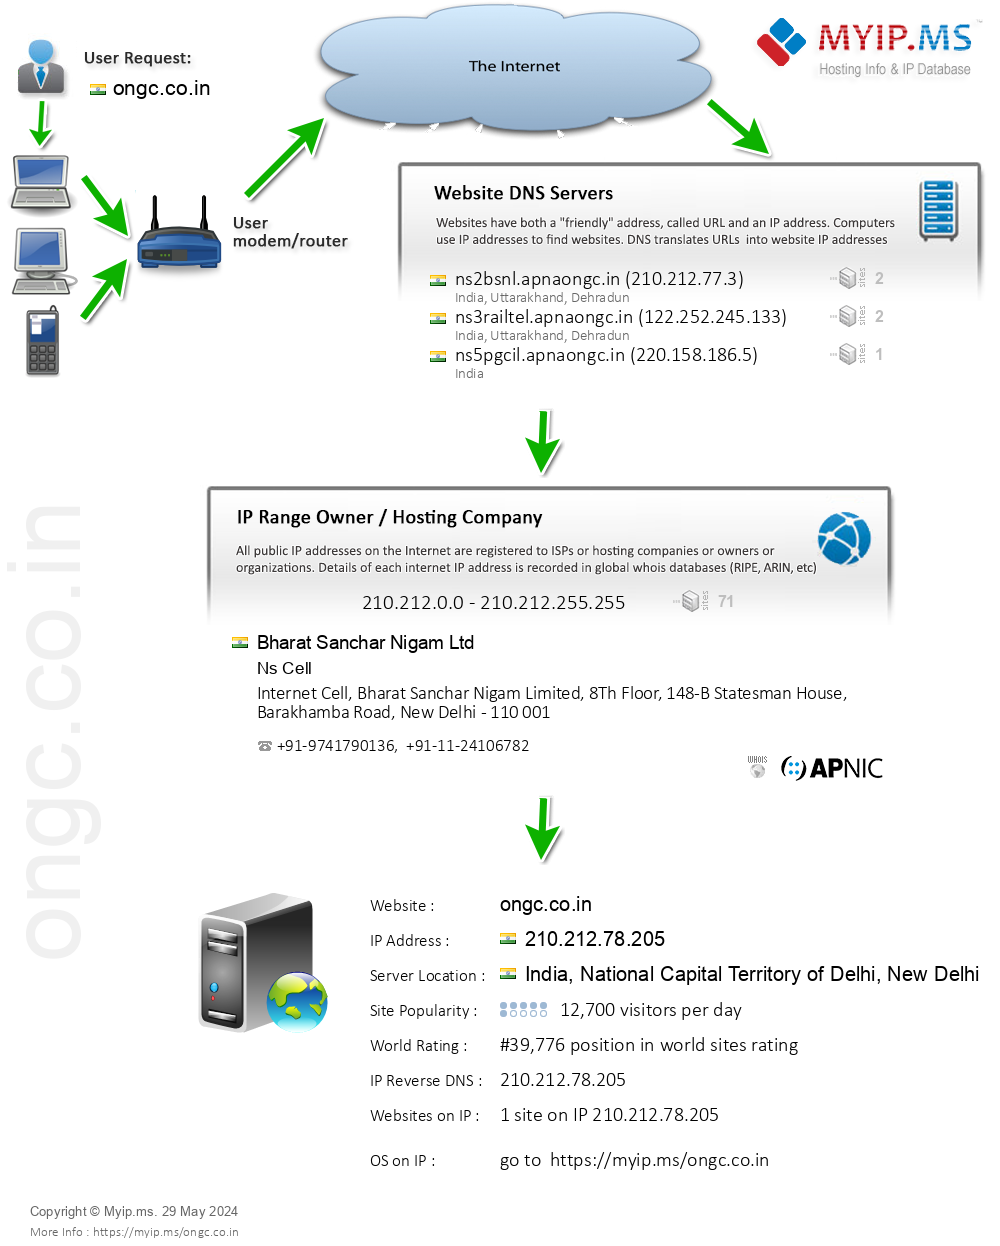 Ongc.co.in - Website Hosting Visual IP Diagram